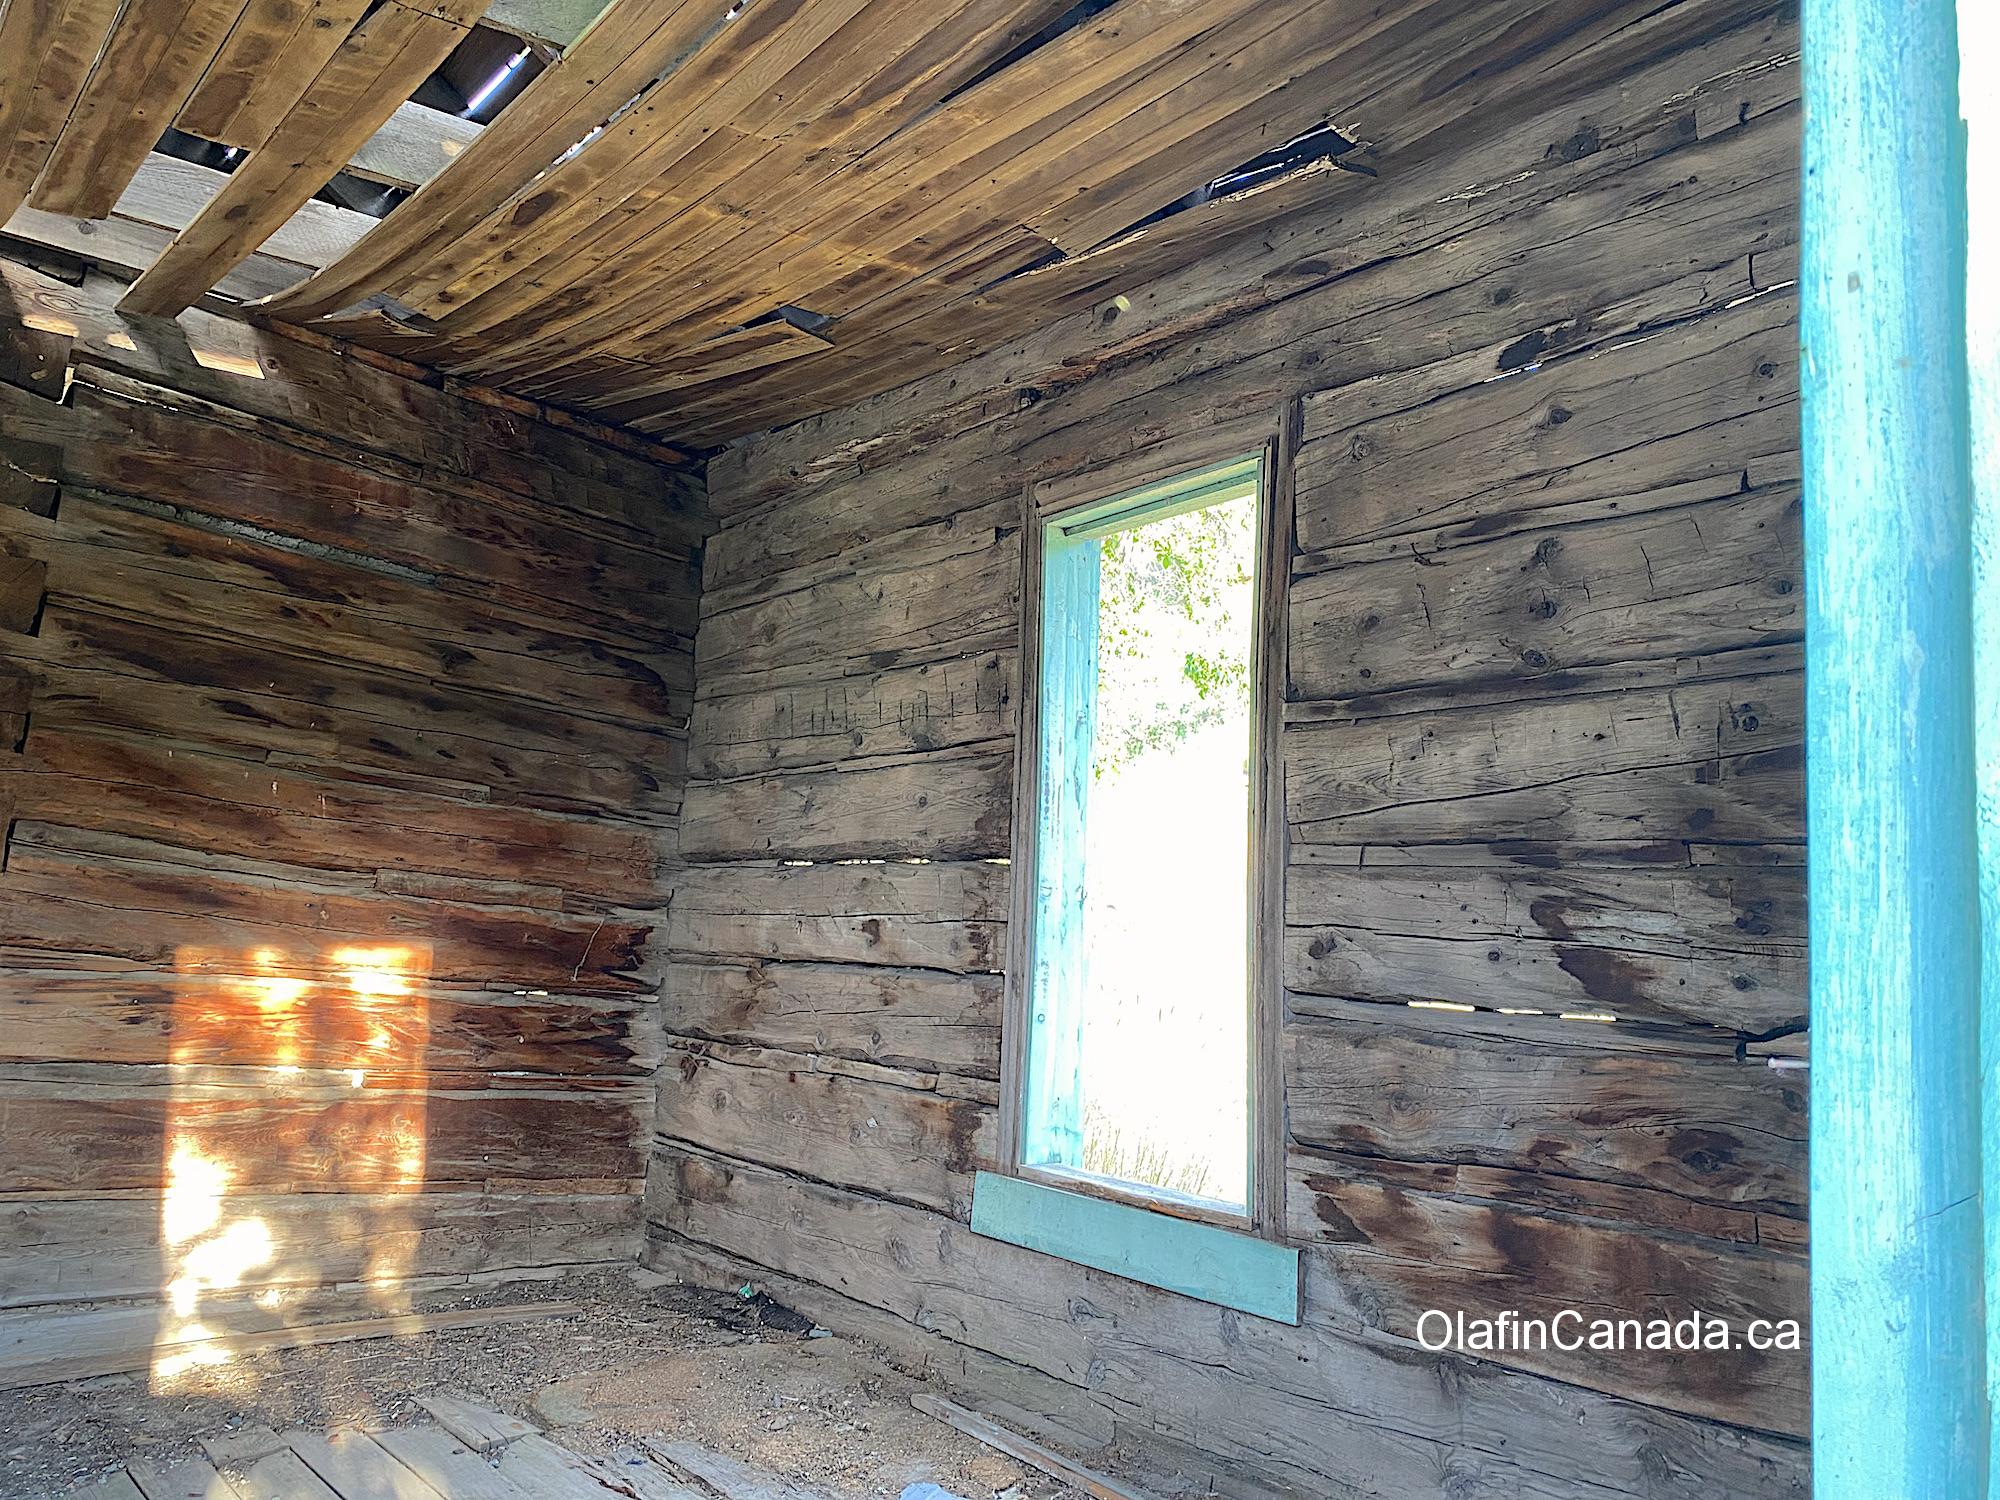 Reflection of the sun in the log home at the Pothole Ranch #olafincanada #britishcolumbia #discoverbc #abandonedbc #chilcotin #farwellcanyon #potholeranch #homestead